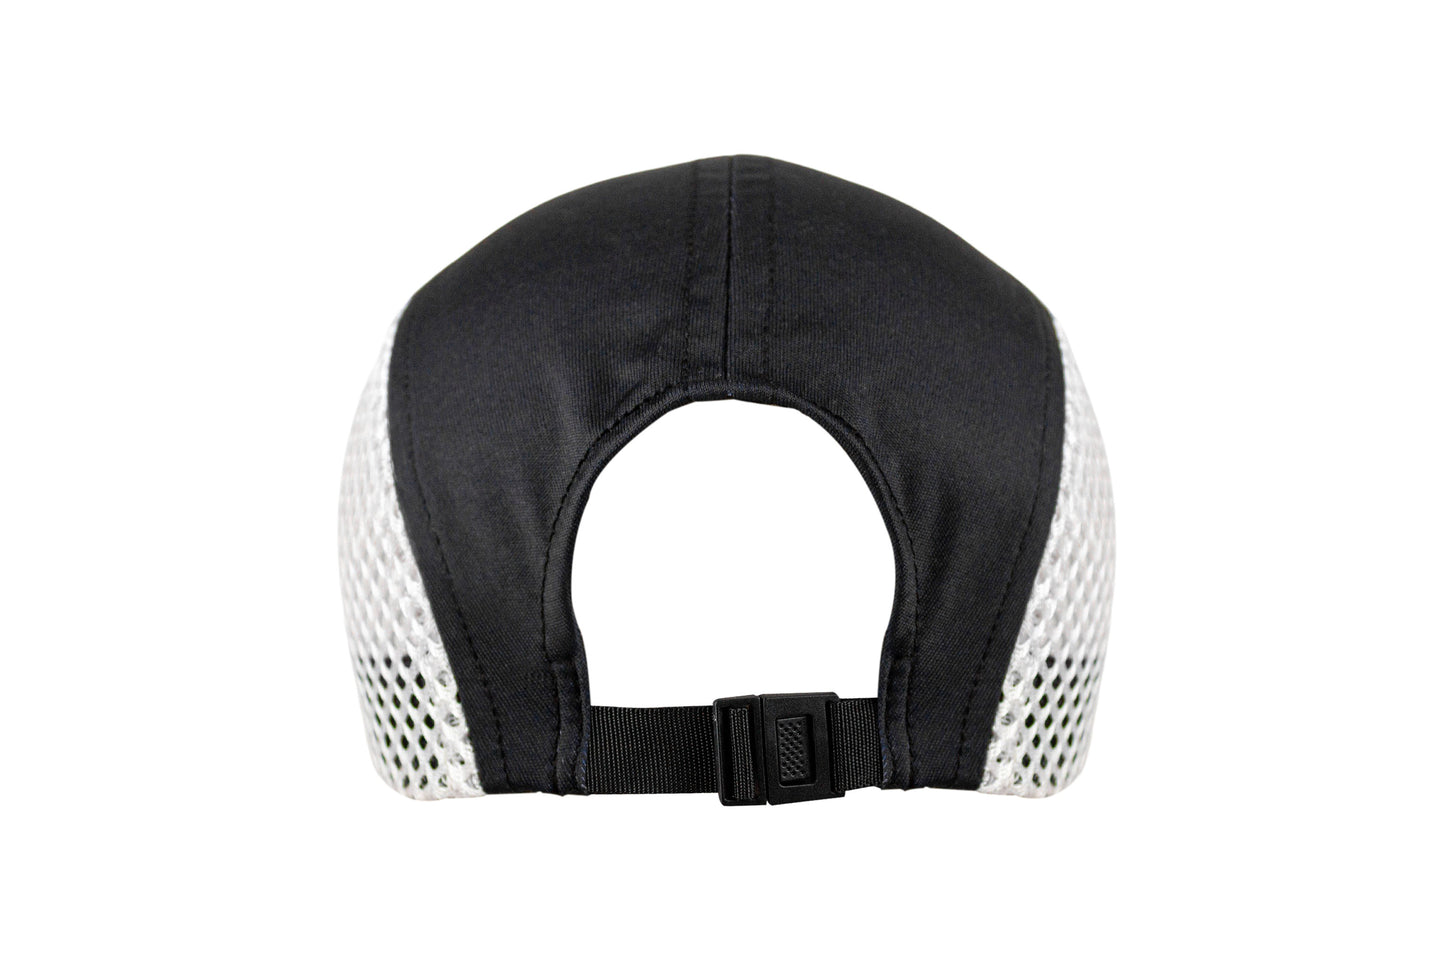 GW “DAYPACK” Mesh Cycling cap (Black)